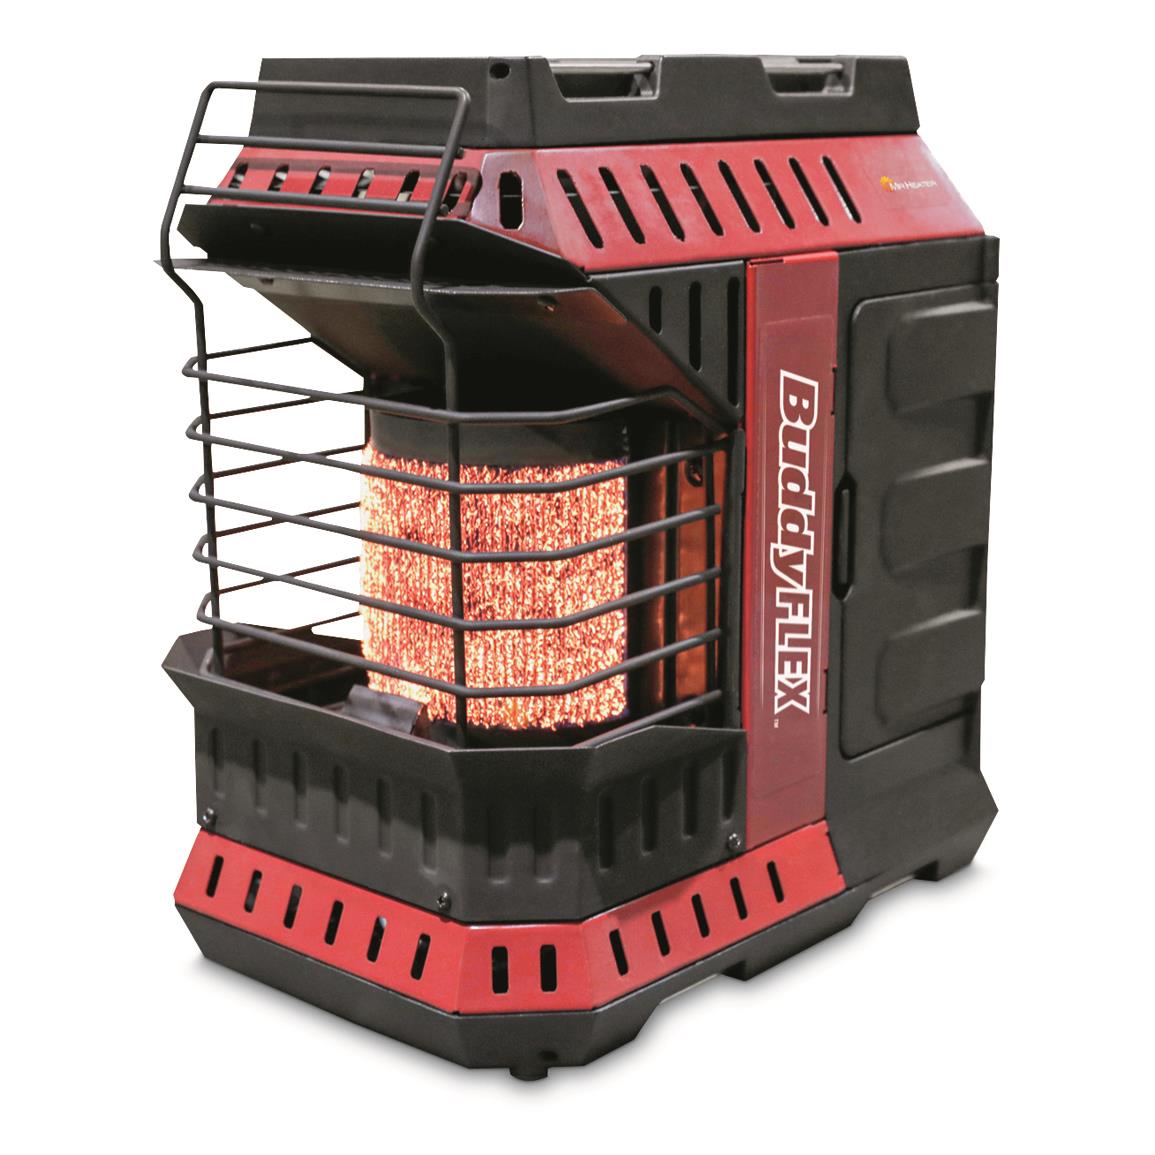 Mr. Heater Buddy FLEX Portable Radiant Heater